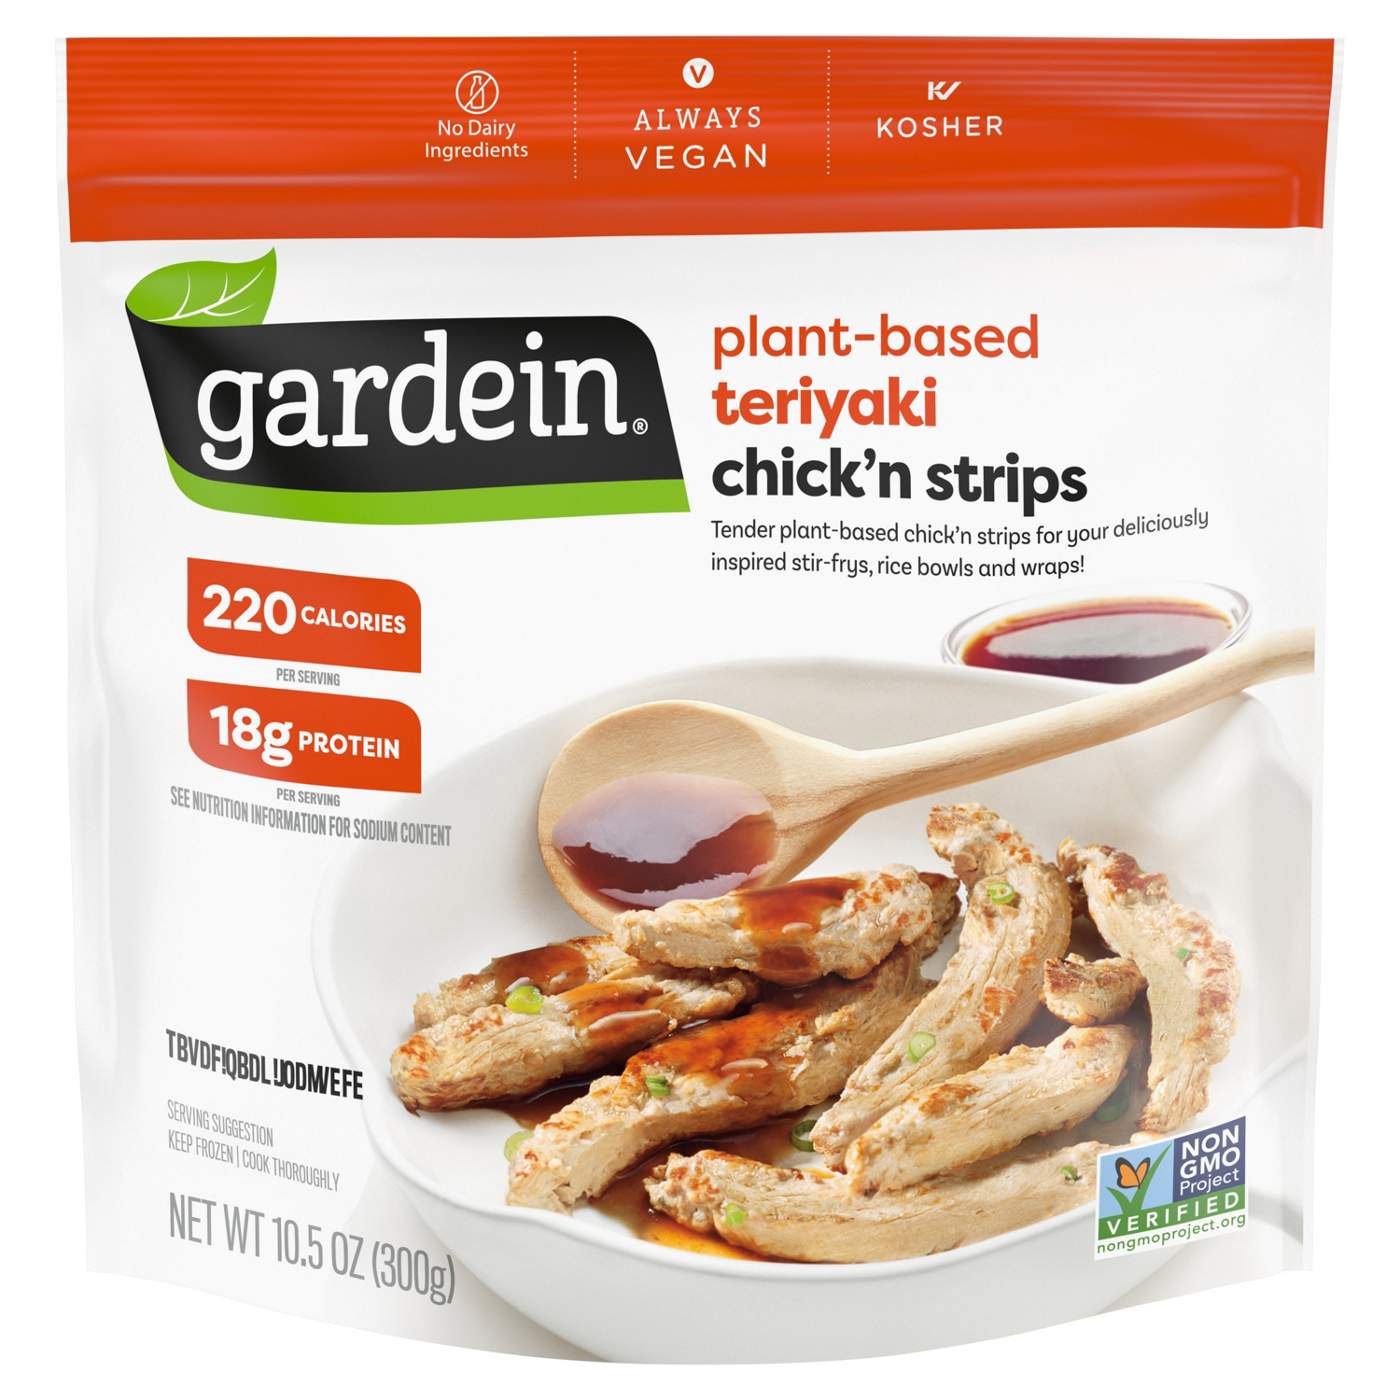 Gardein Plant Based Teriyaki Chickn Strips Shop Meat Alternatives At H E B